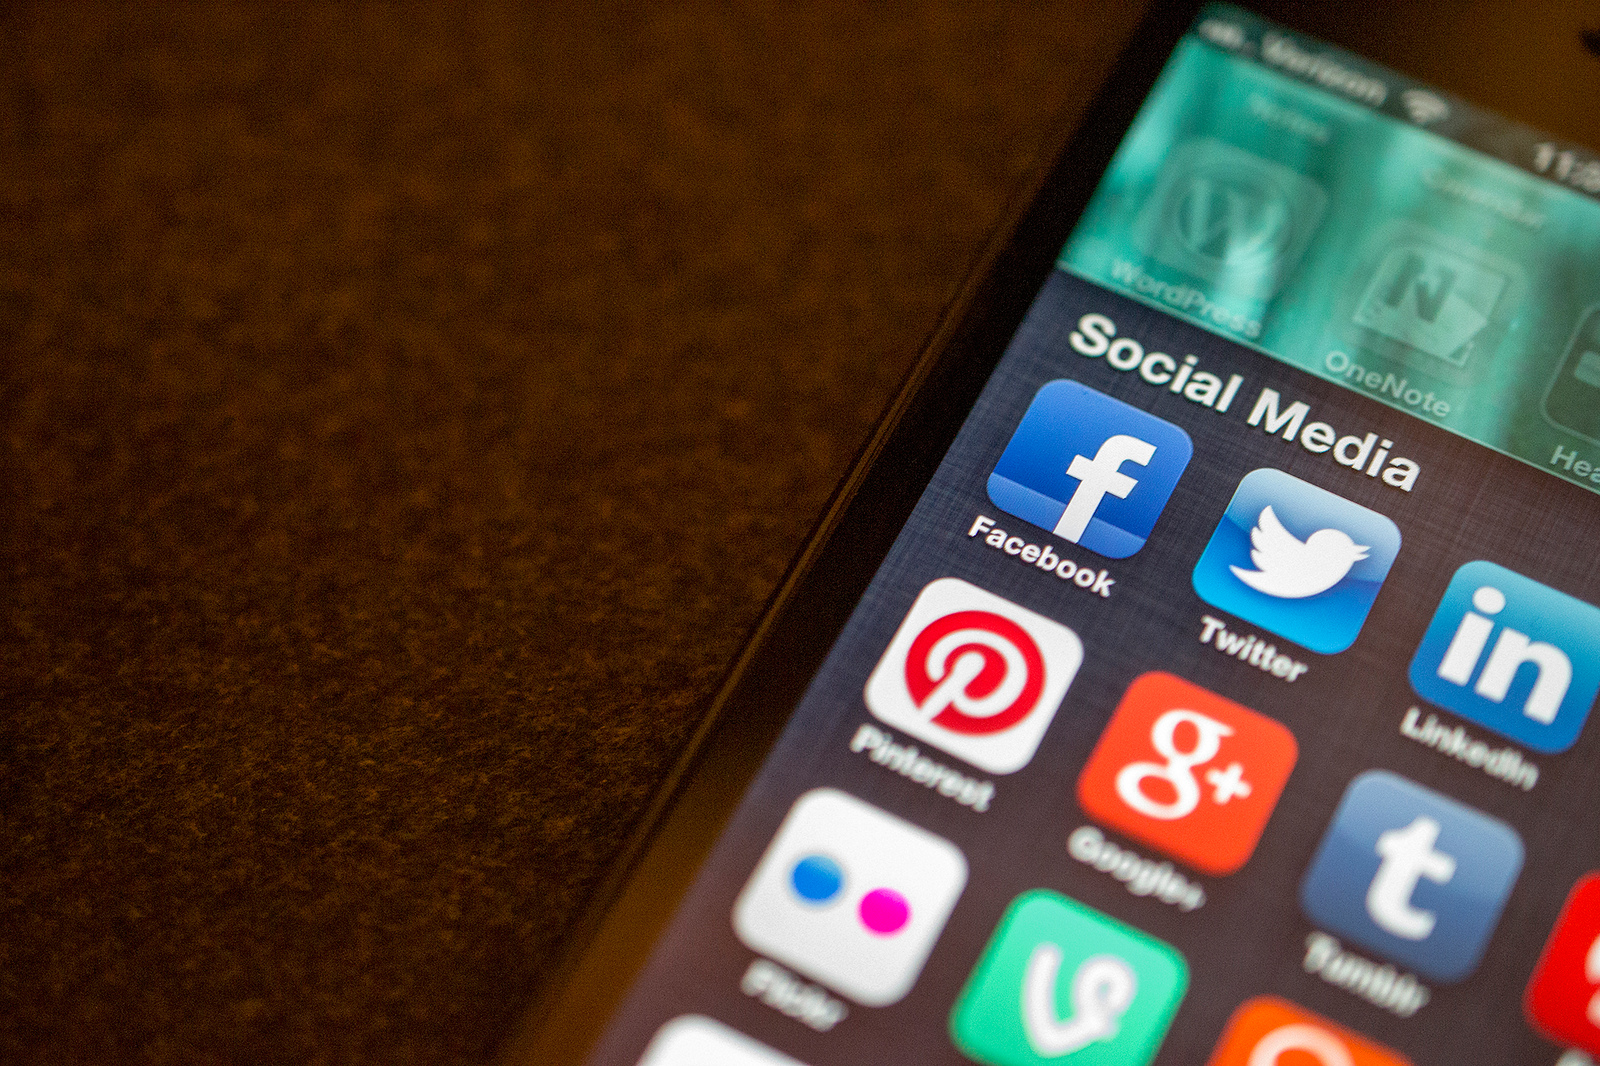 Social Media Tools & Storytelling – Hootsuite presents #MUSTREAD insights